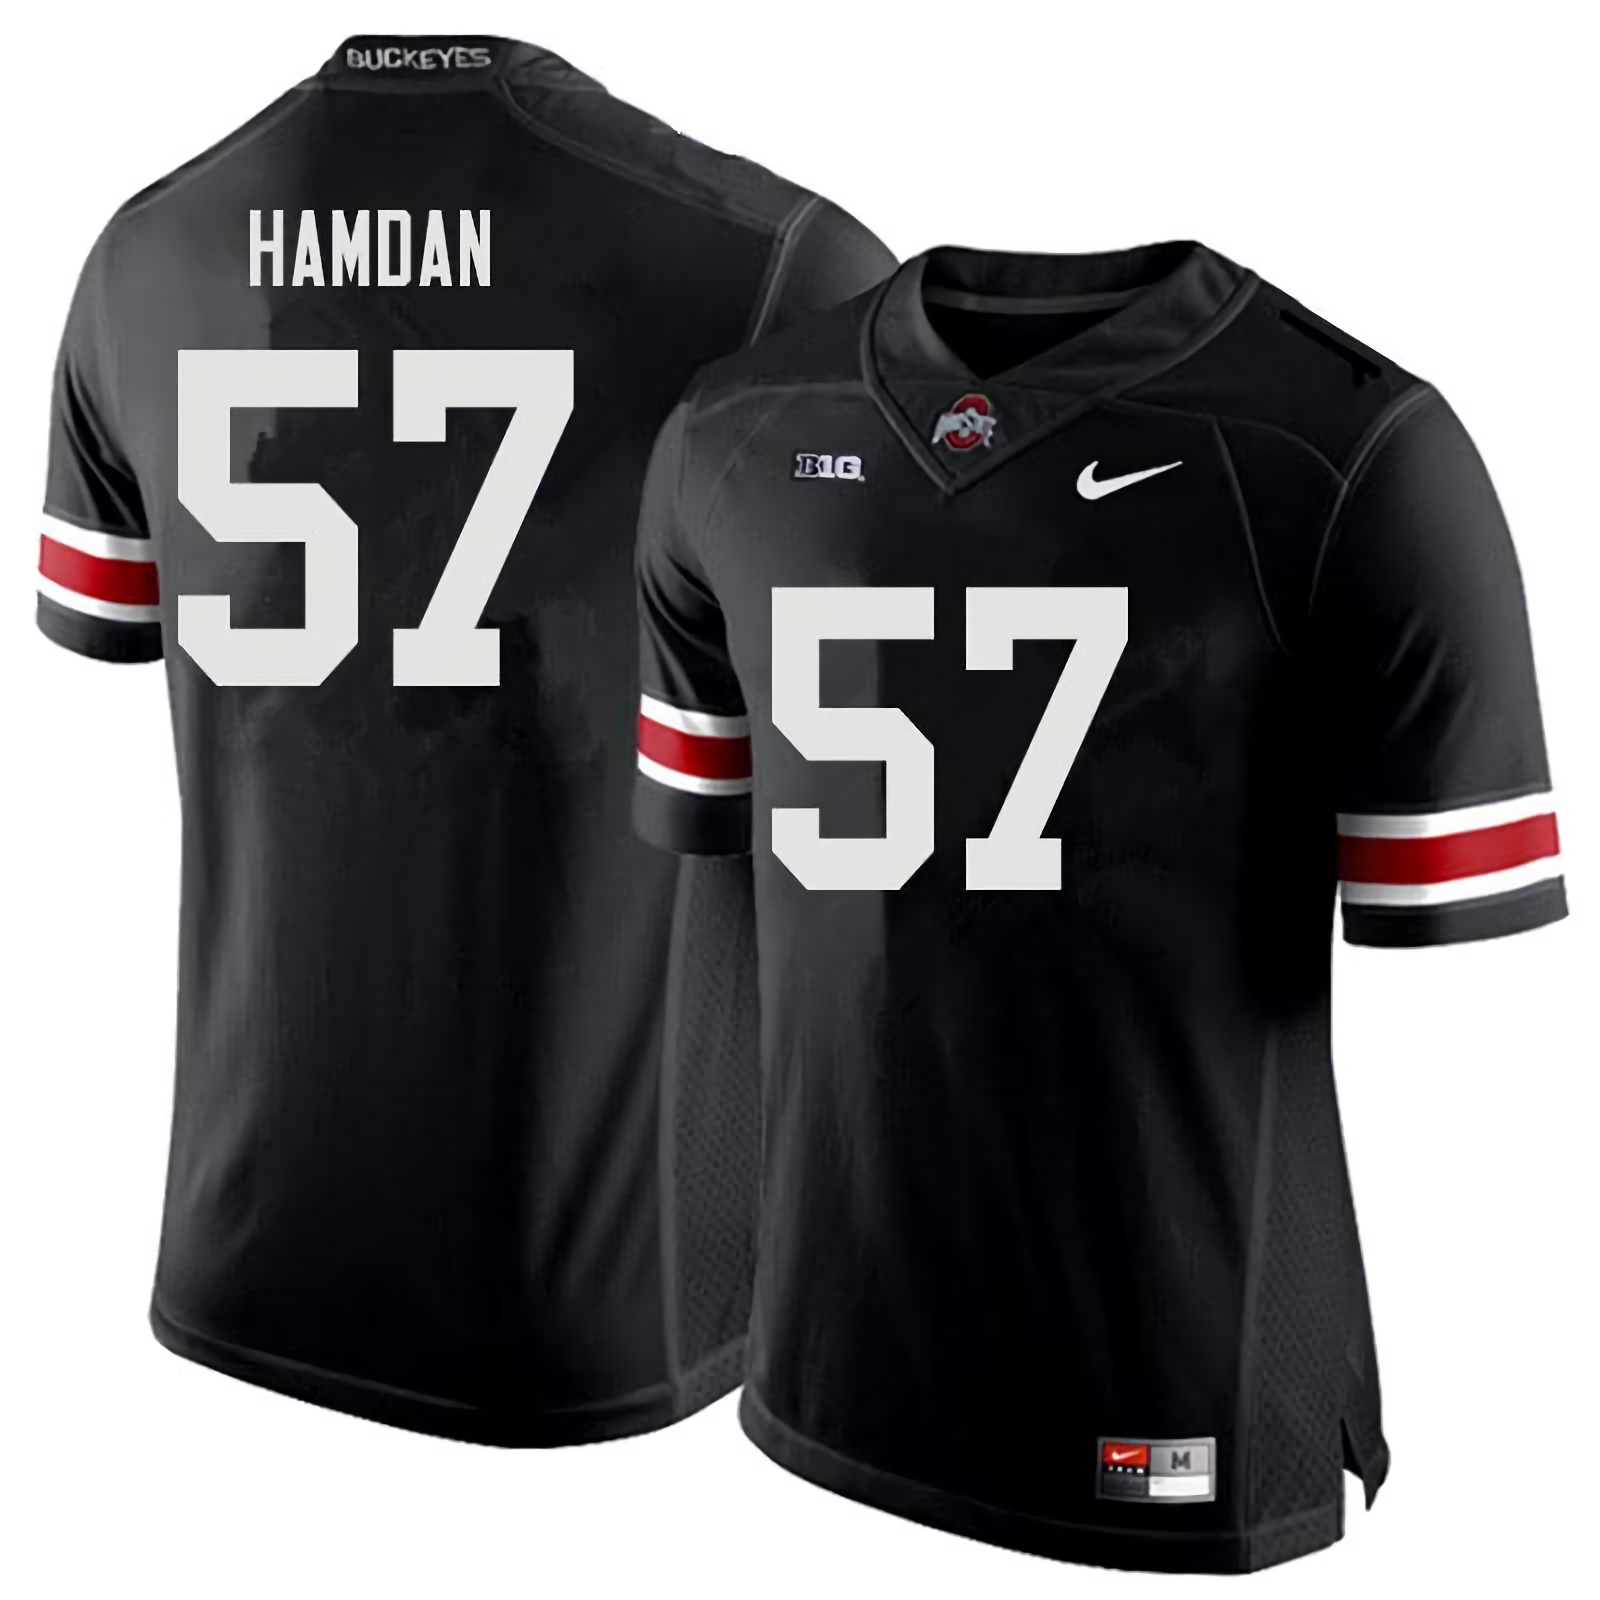 Zaid Hamdan Ohio State Buckeyes Men's NCAA #57 Nike Black College Stitched Football Jersey UVW2256AW